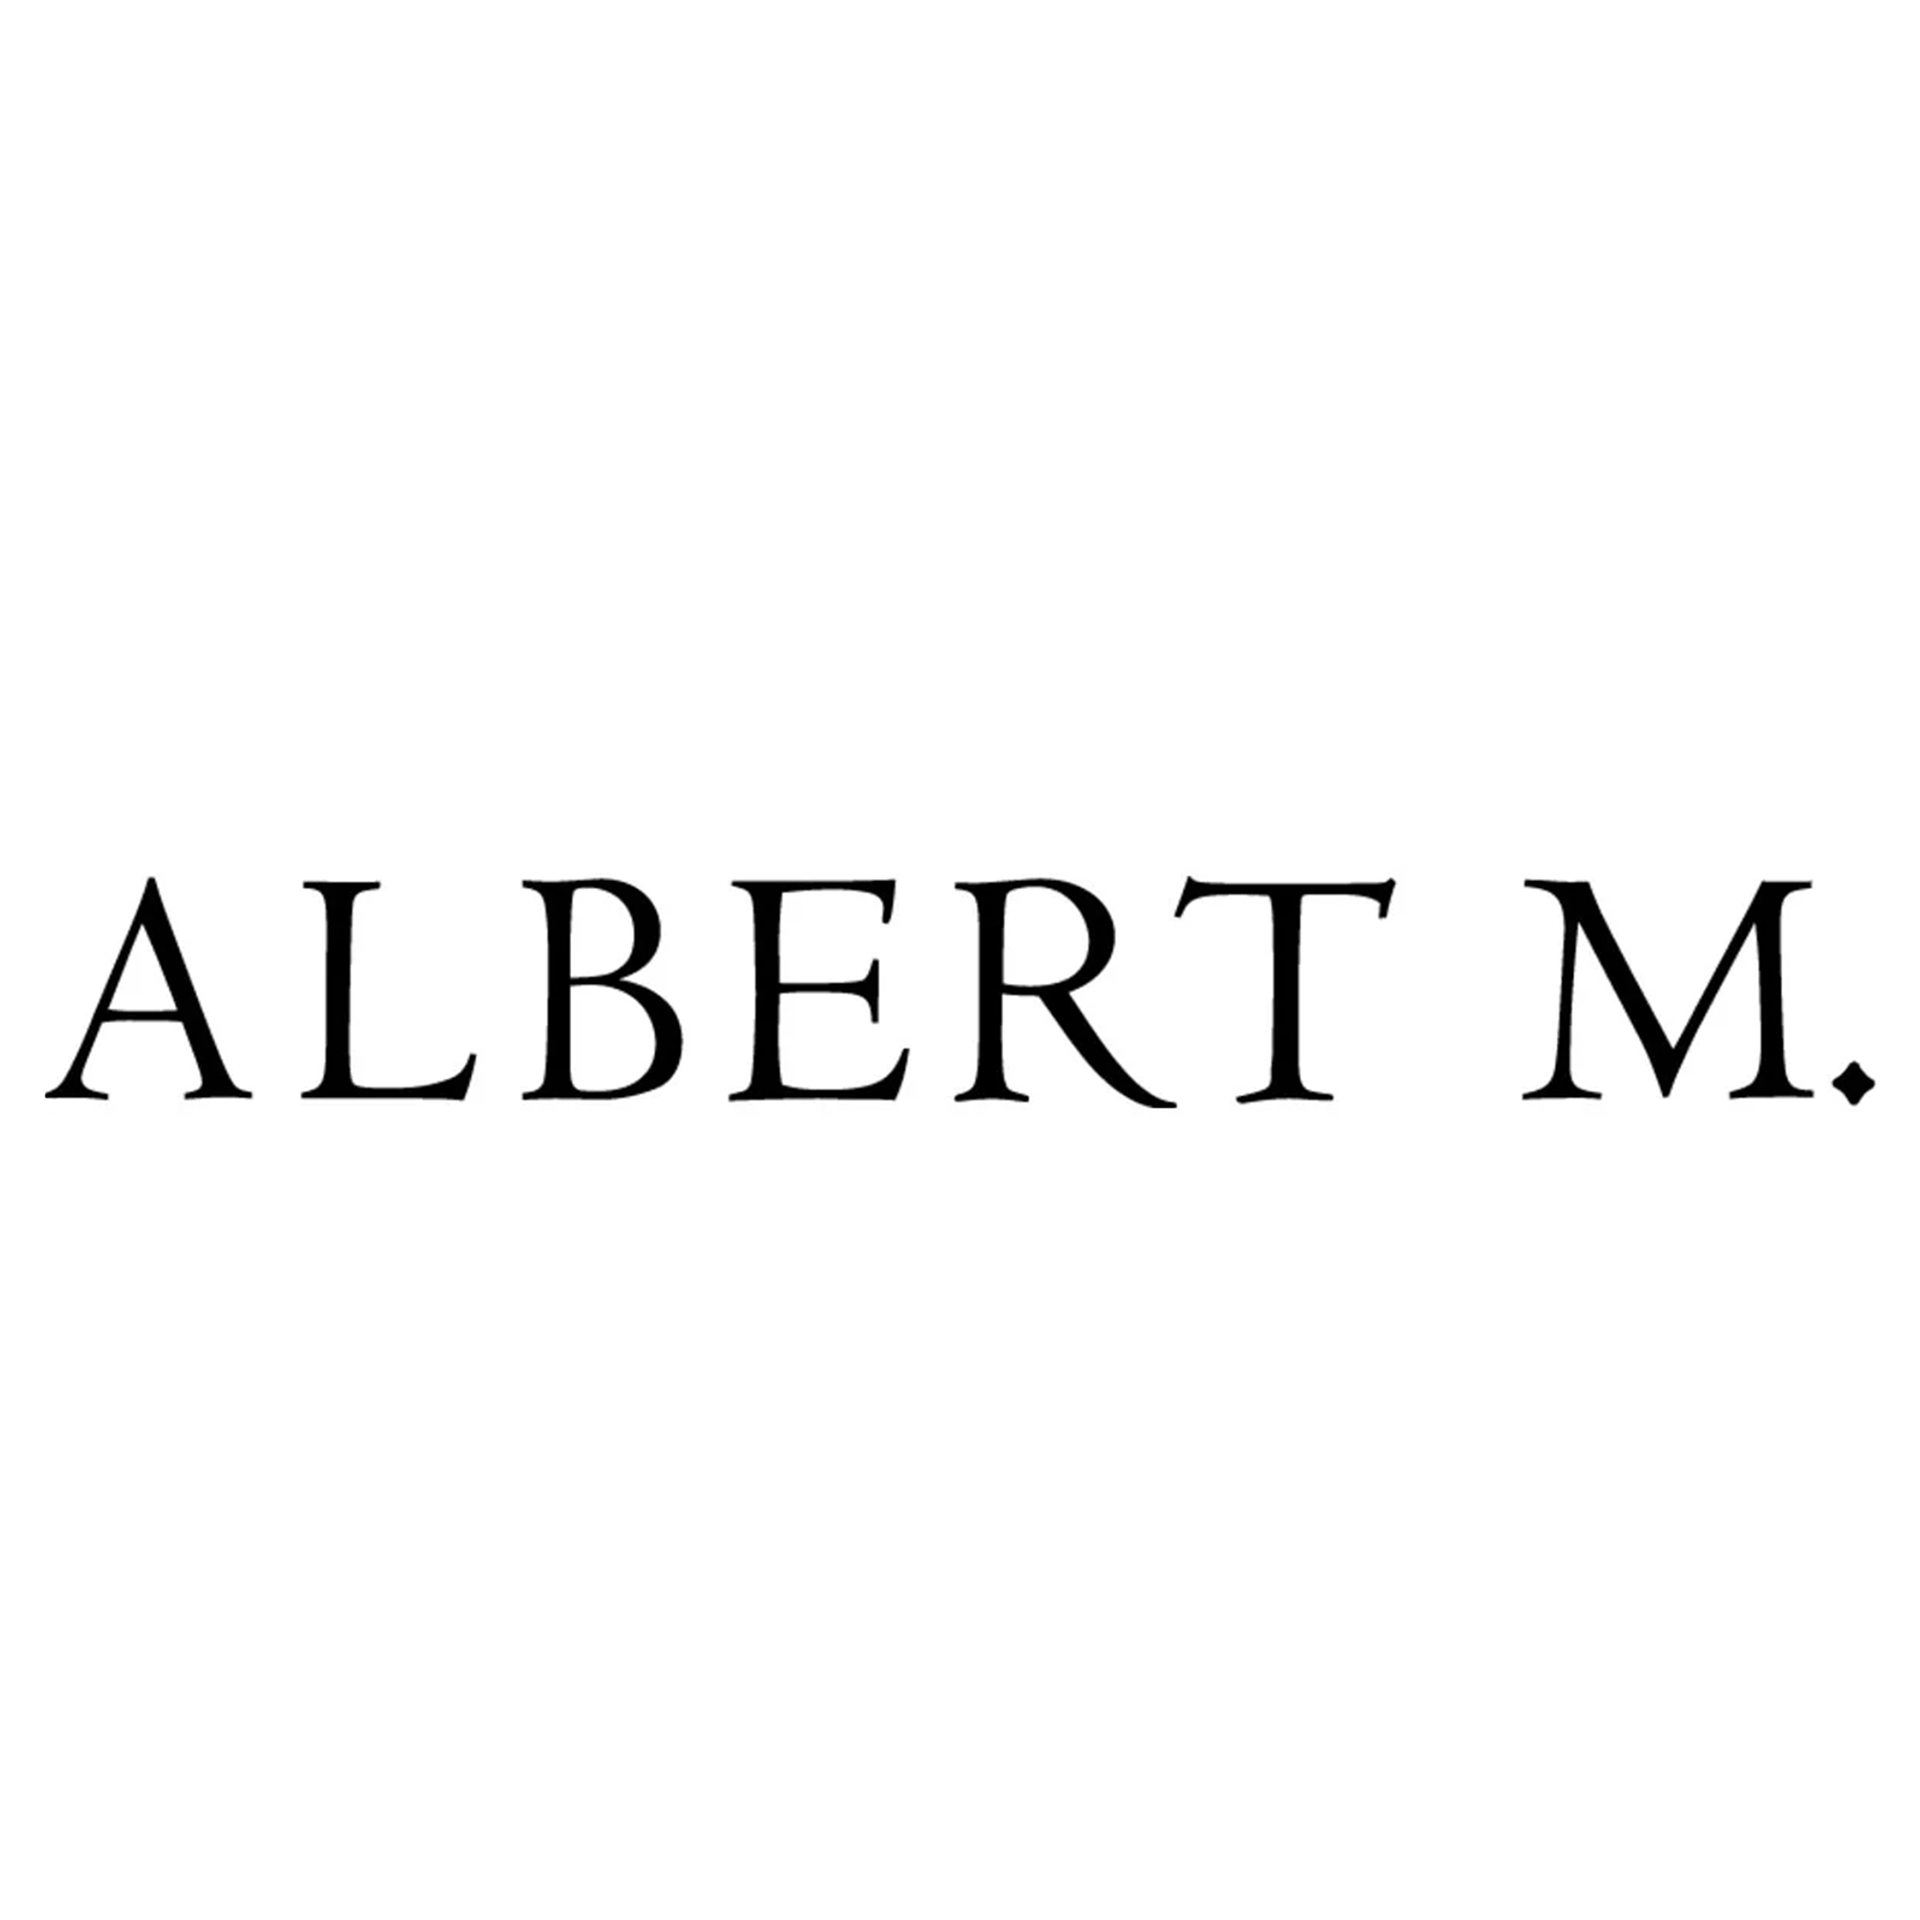 Albert M